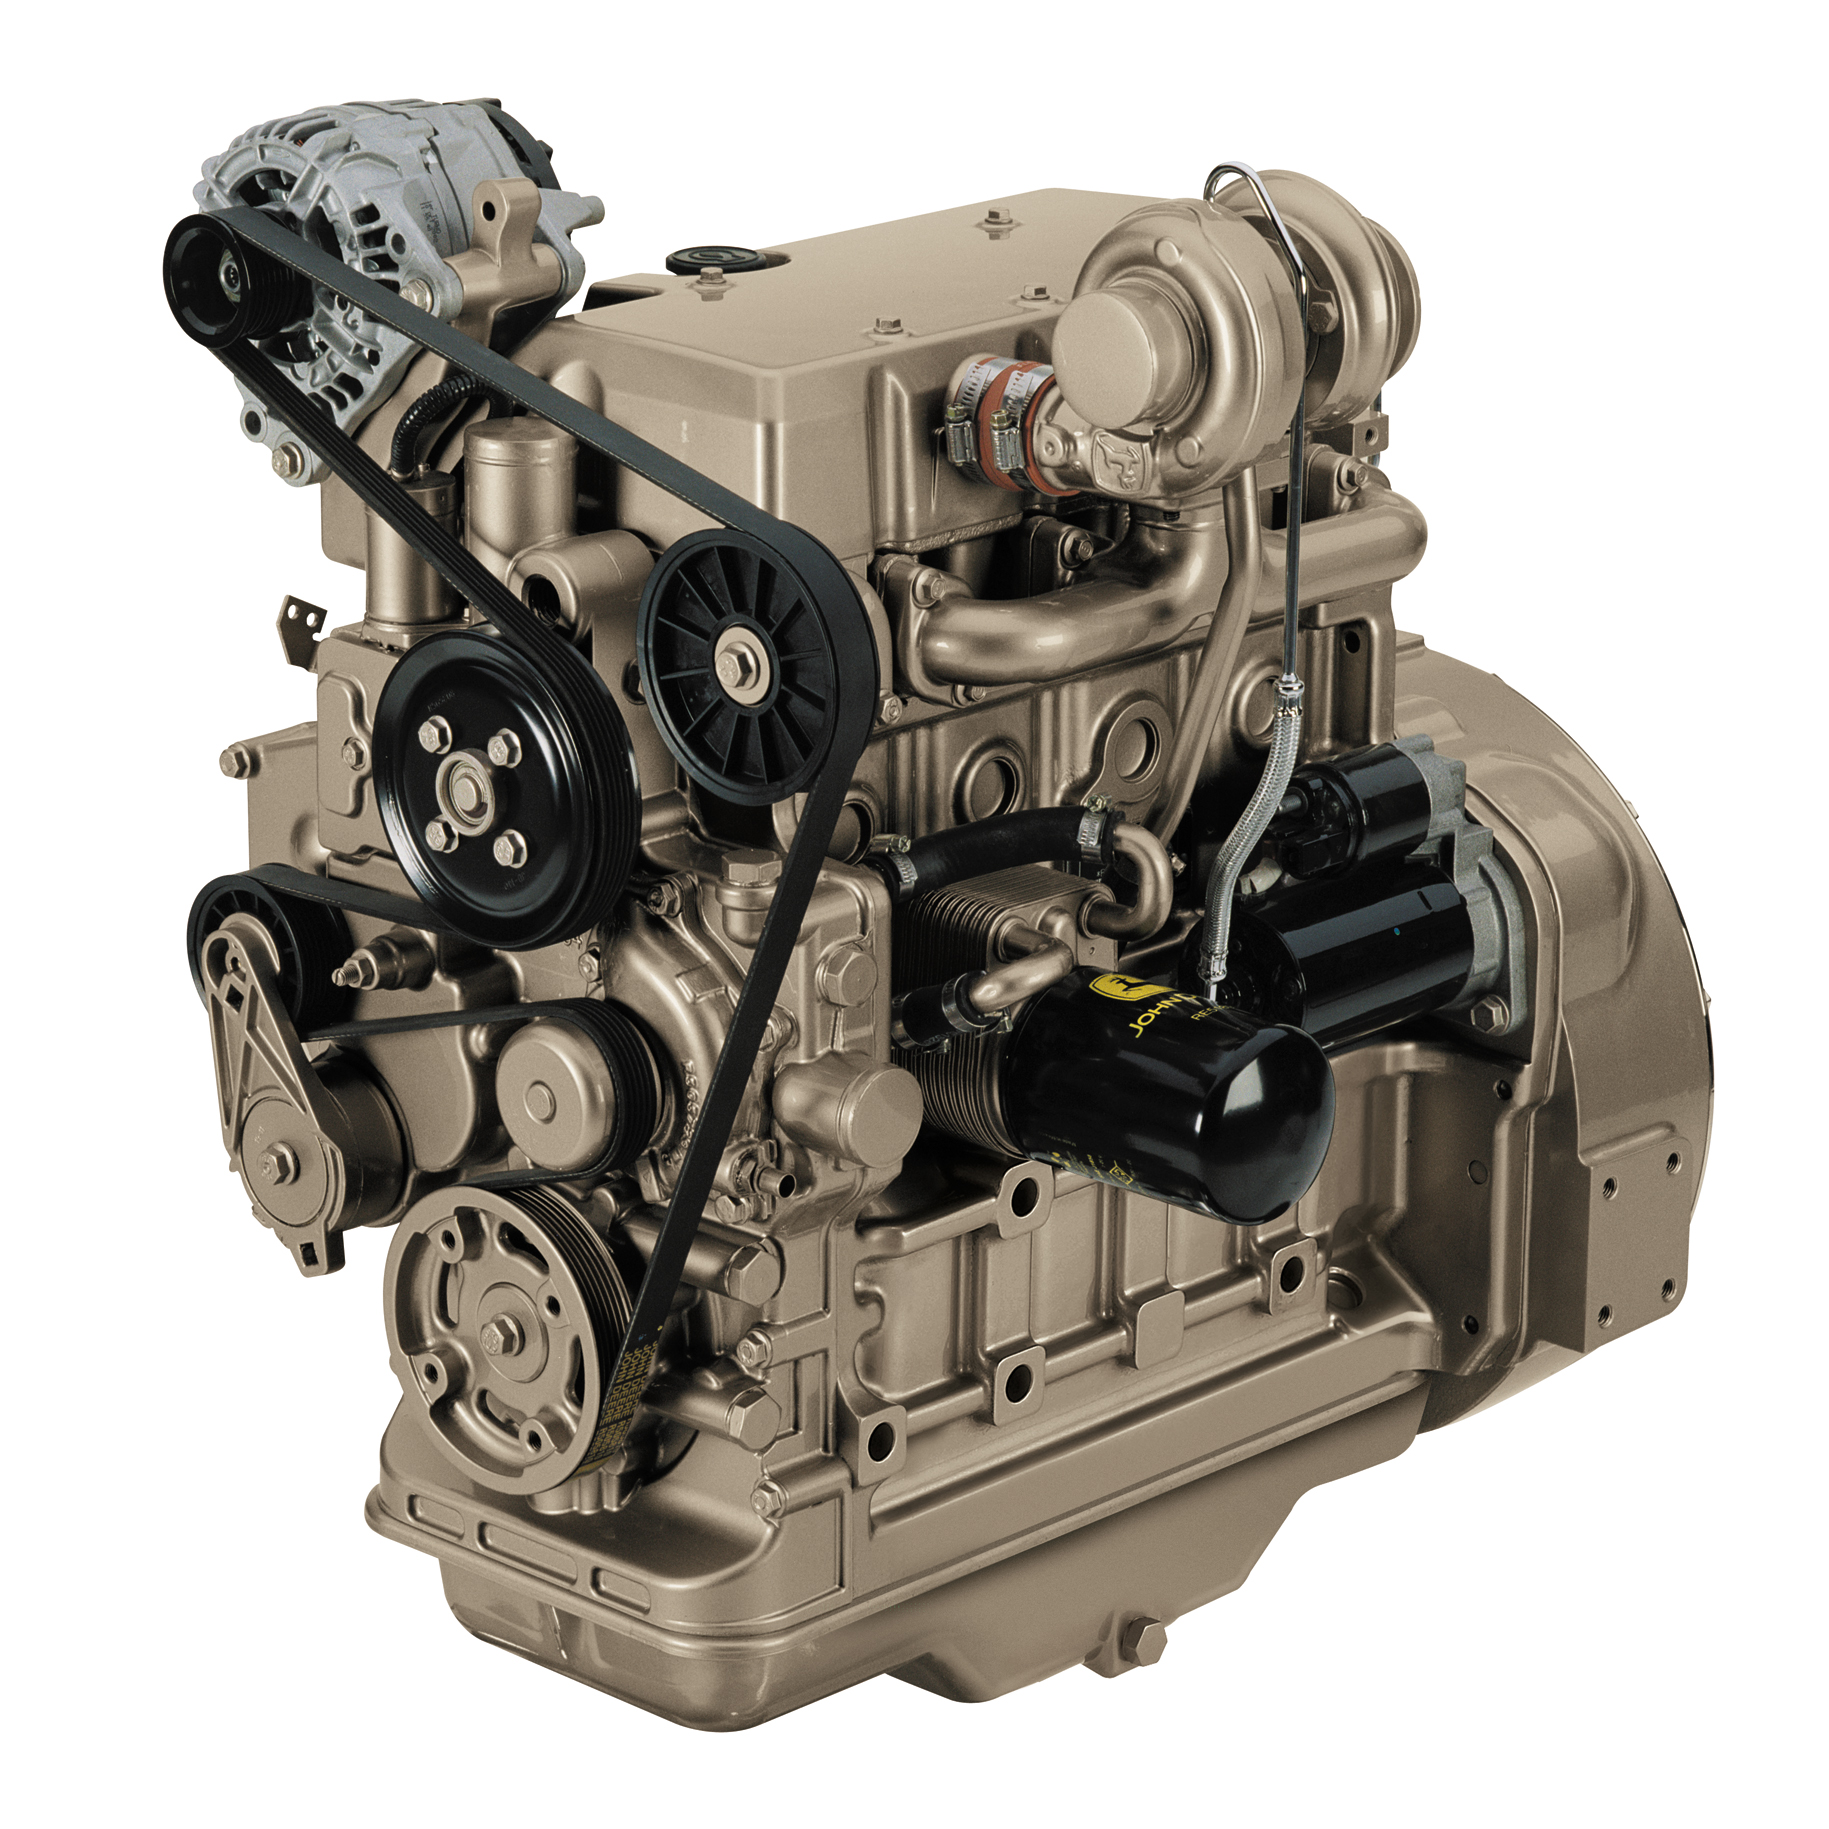 John Deere Industrial Engines Parts Service | Melton ...